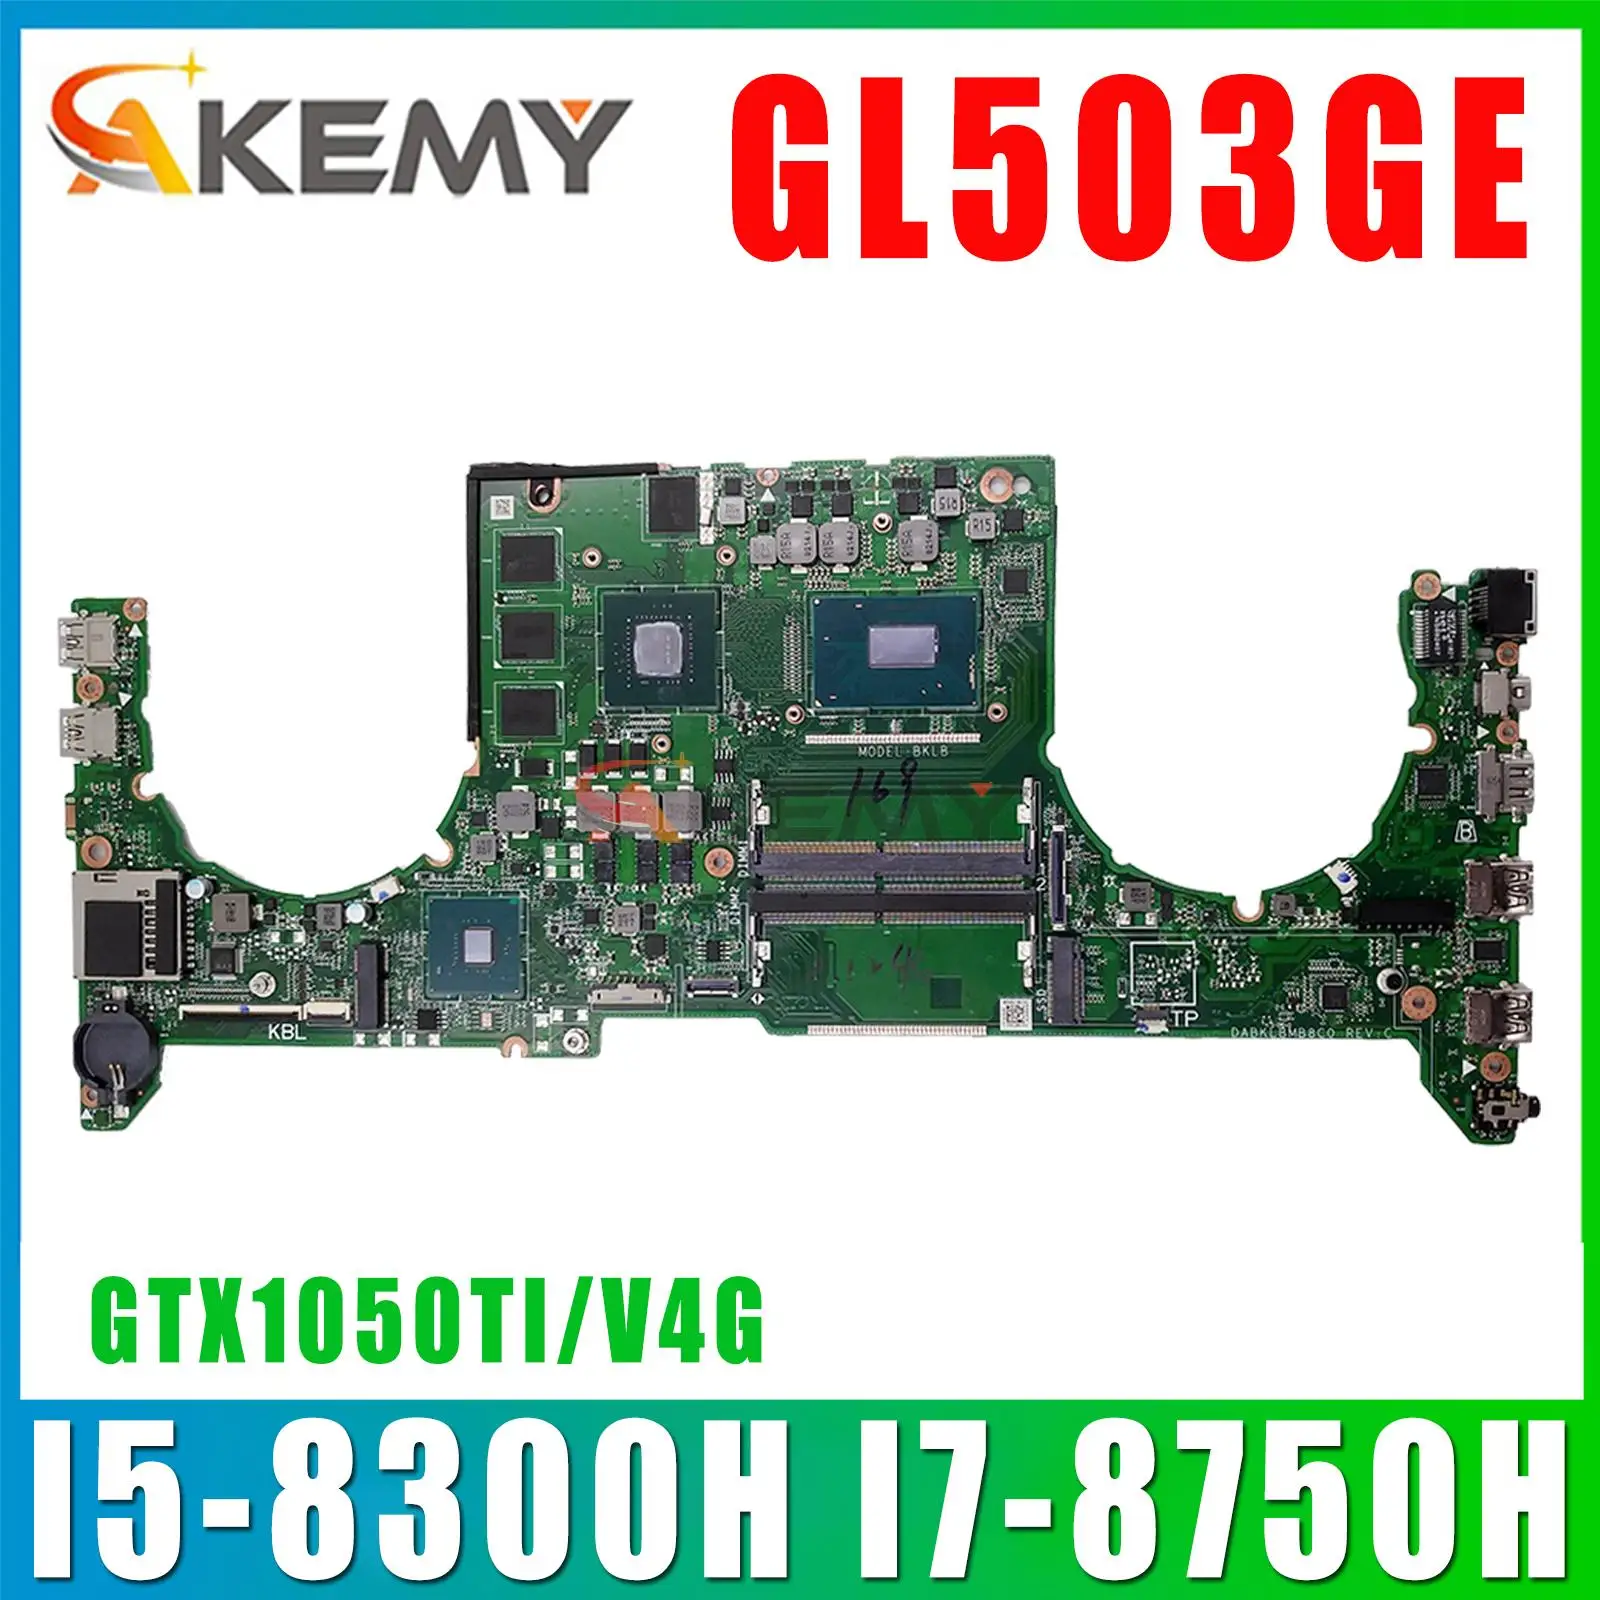 

DABKLBMB8C0 Laptop Motherboard For ASUS ROG GL503GE Notebook Mainboard W/CPU I5-8300H I7-8750H GPU GTX1050TI/V4G 100% Test